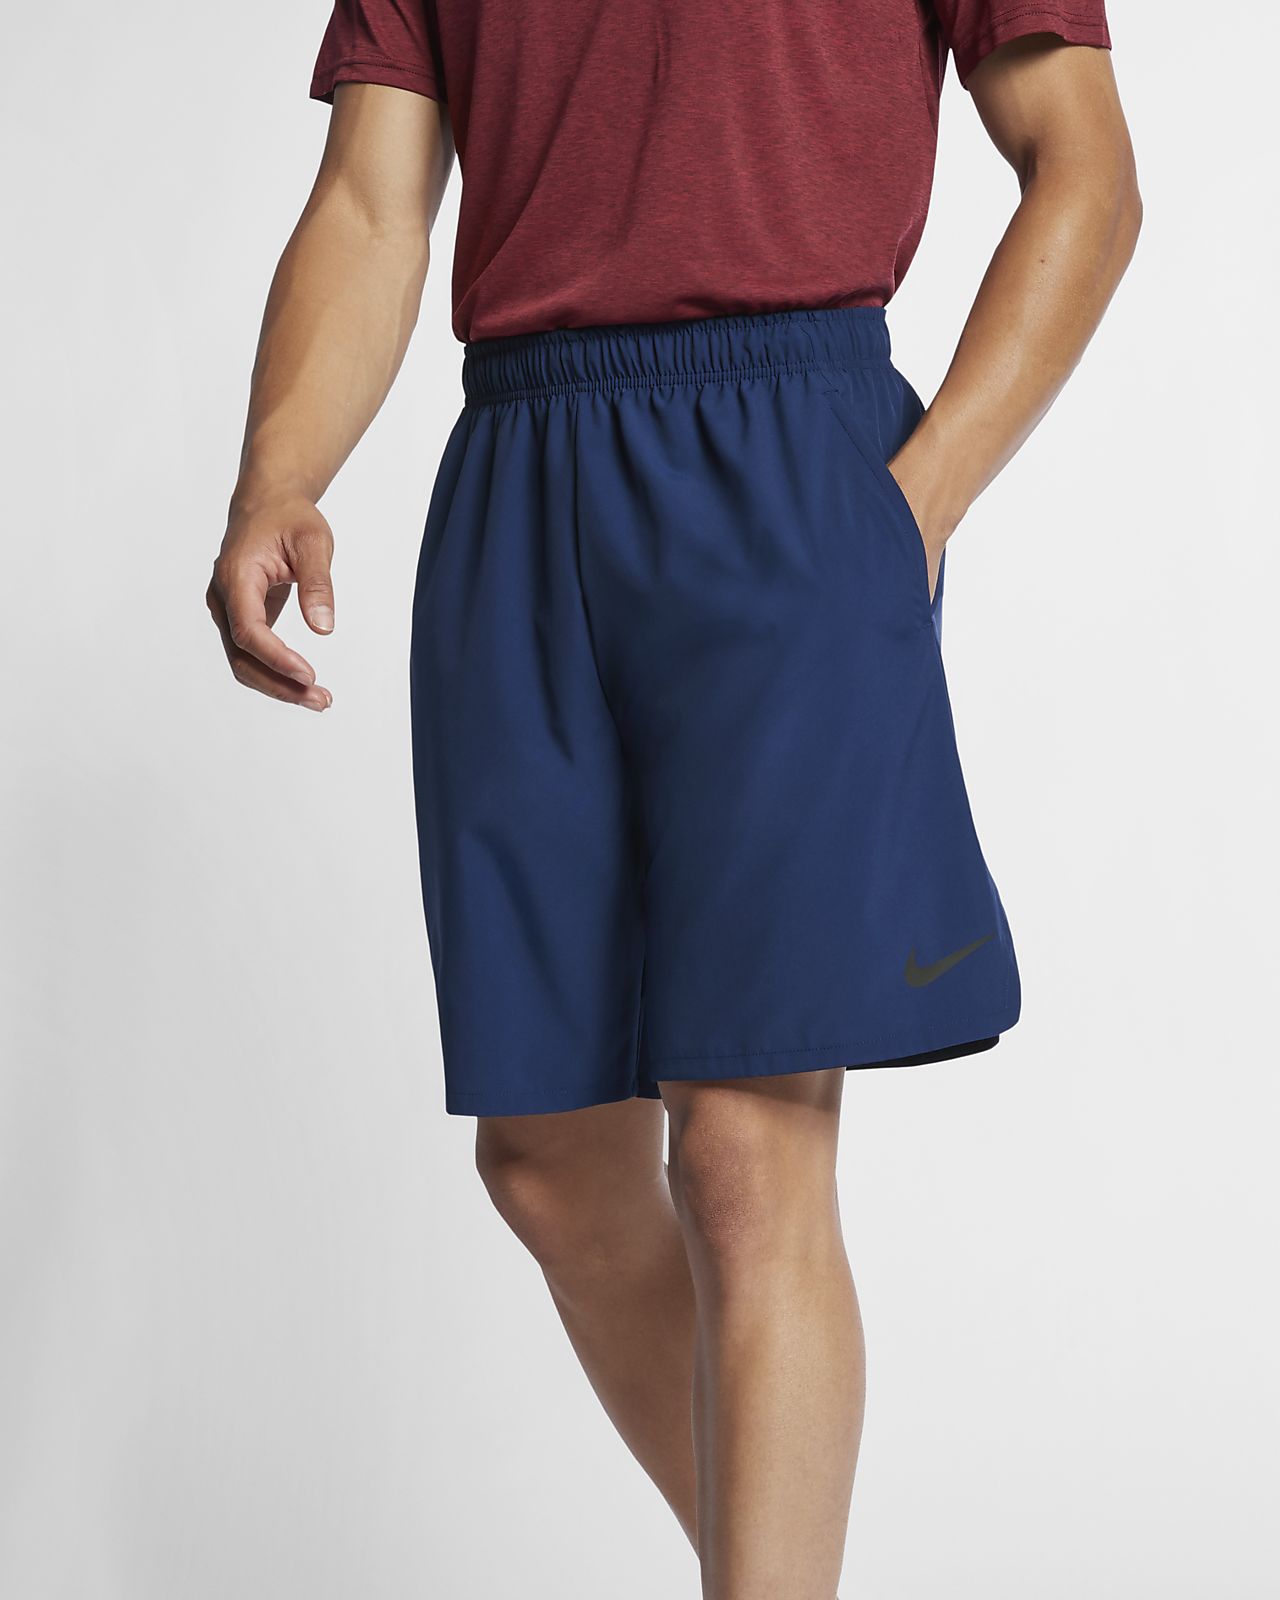 nike men's flex woven training shorts